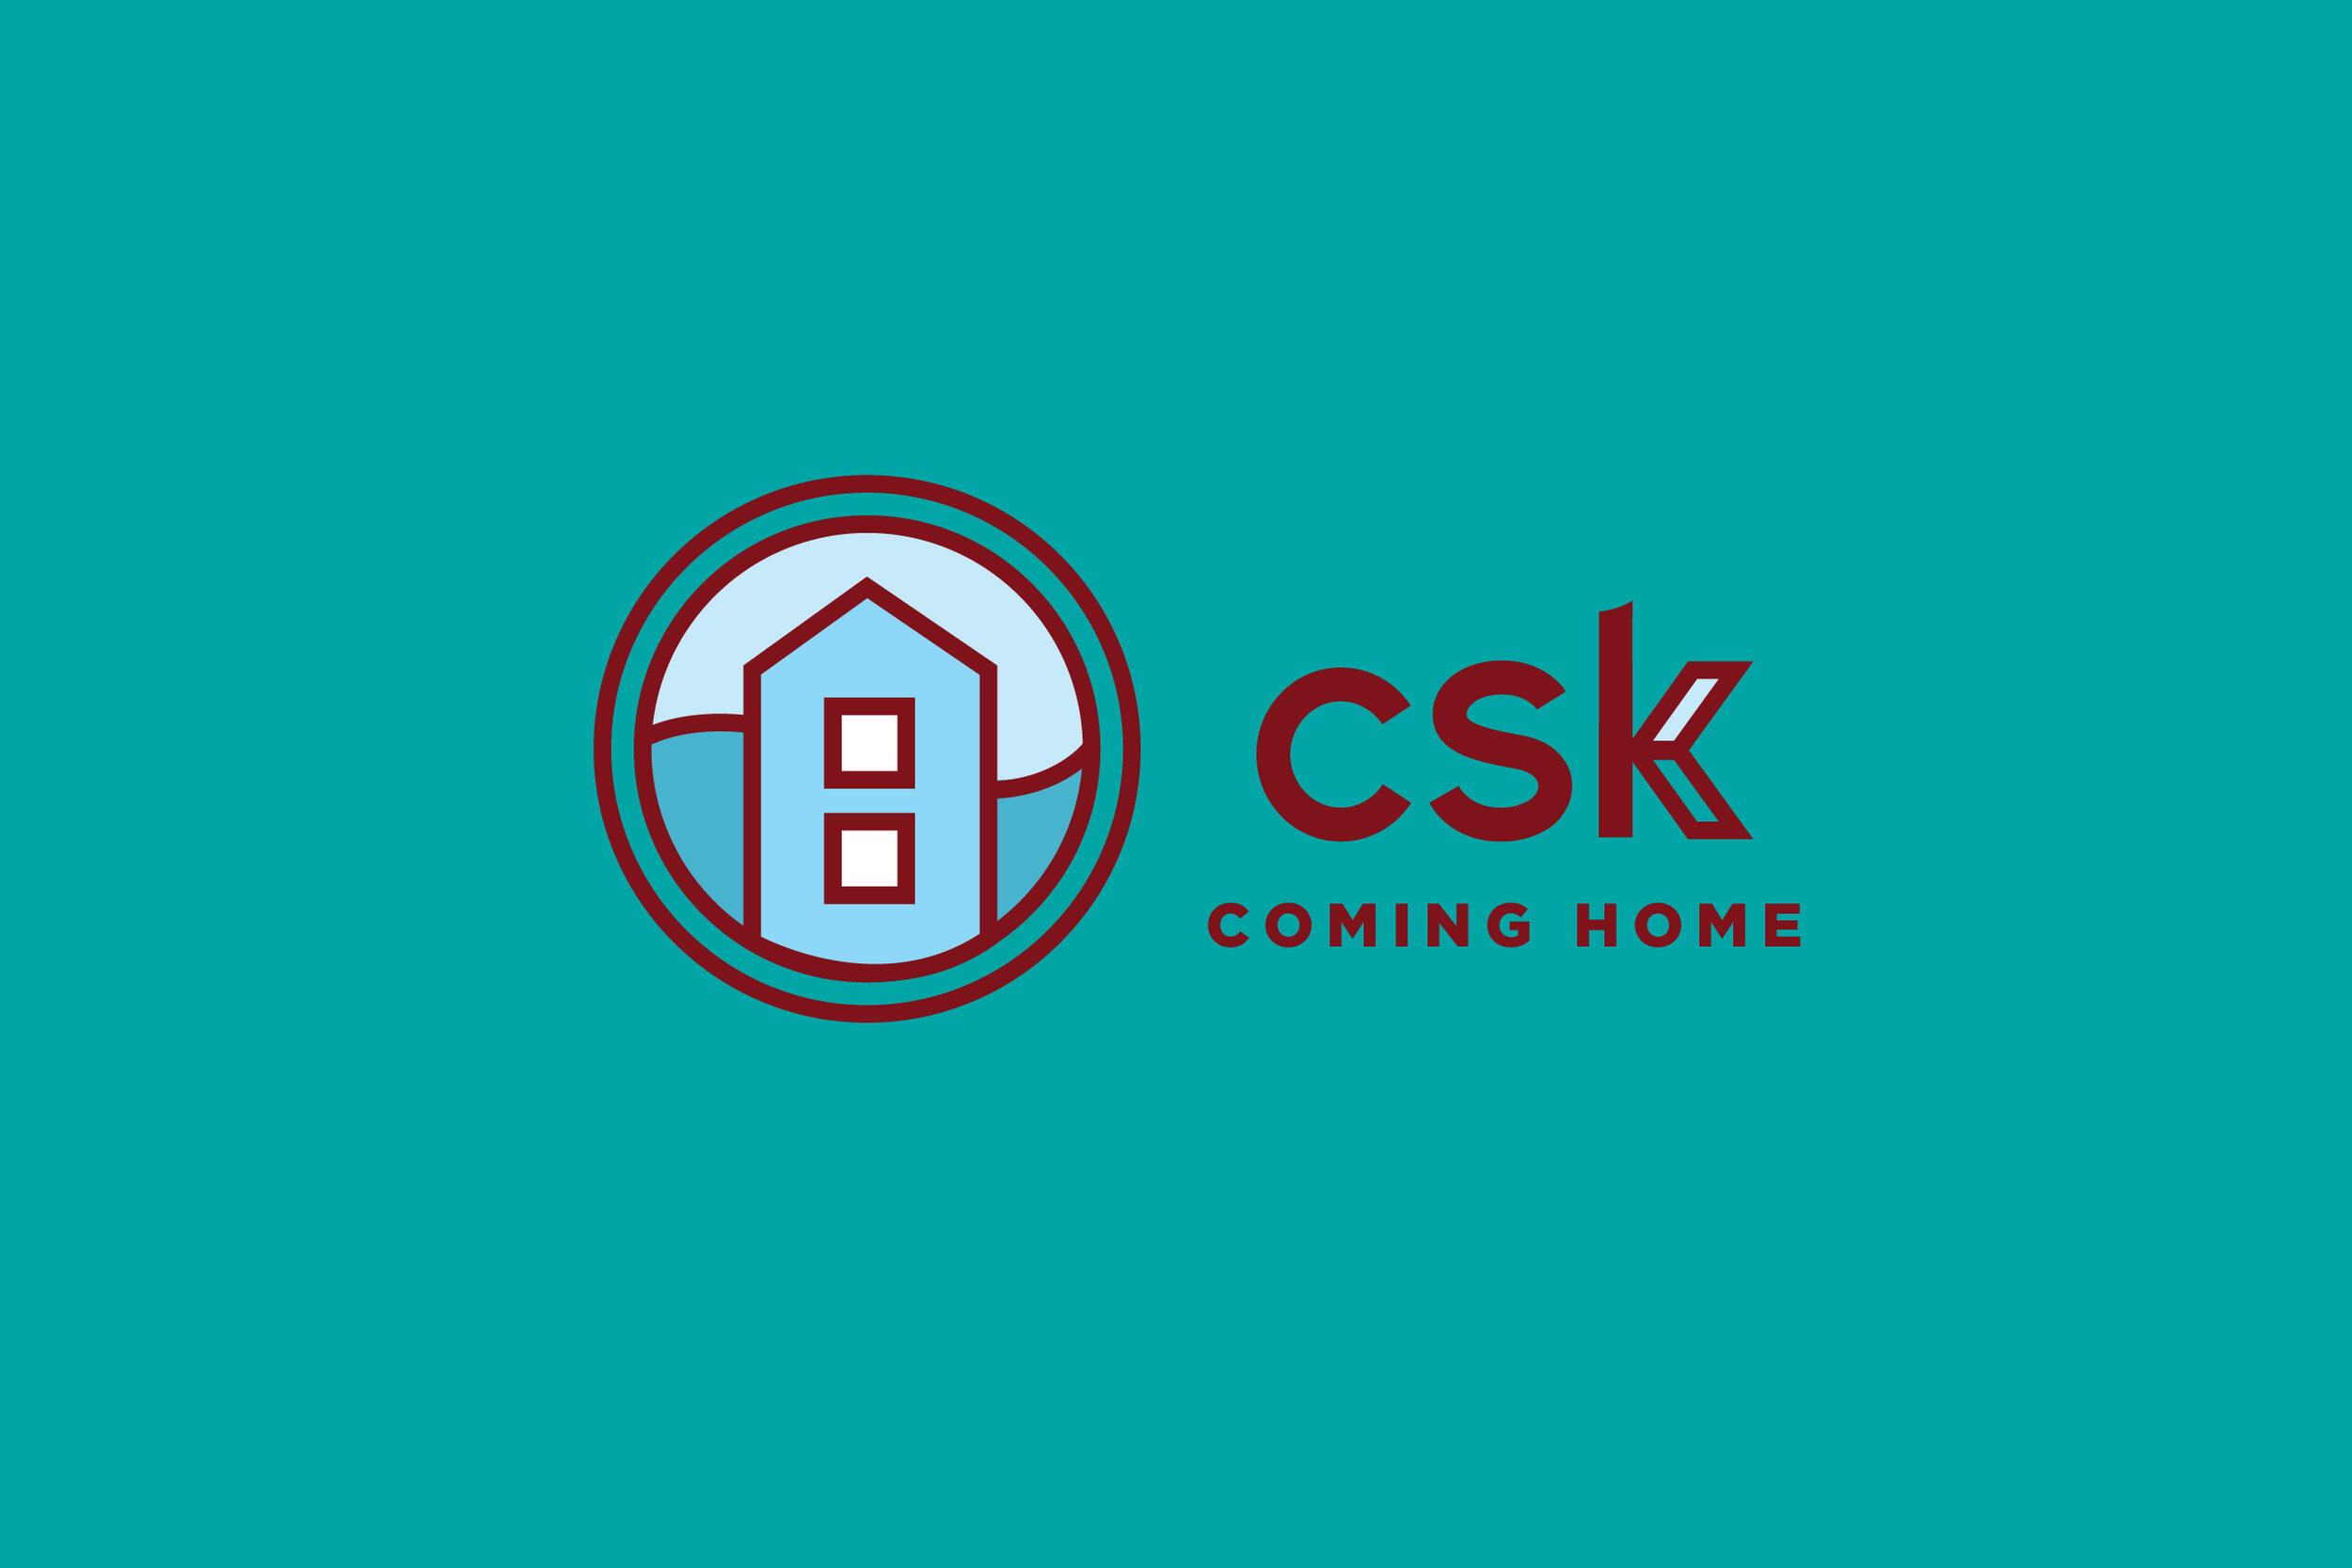 CSK-Outreach-Website-Images_Coming-Home.jpg